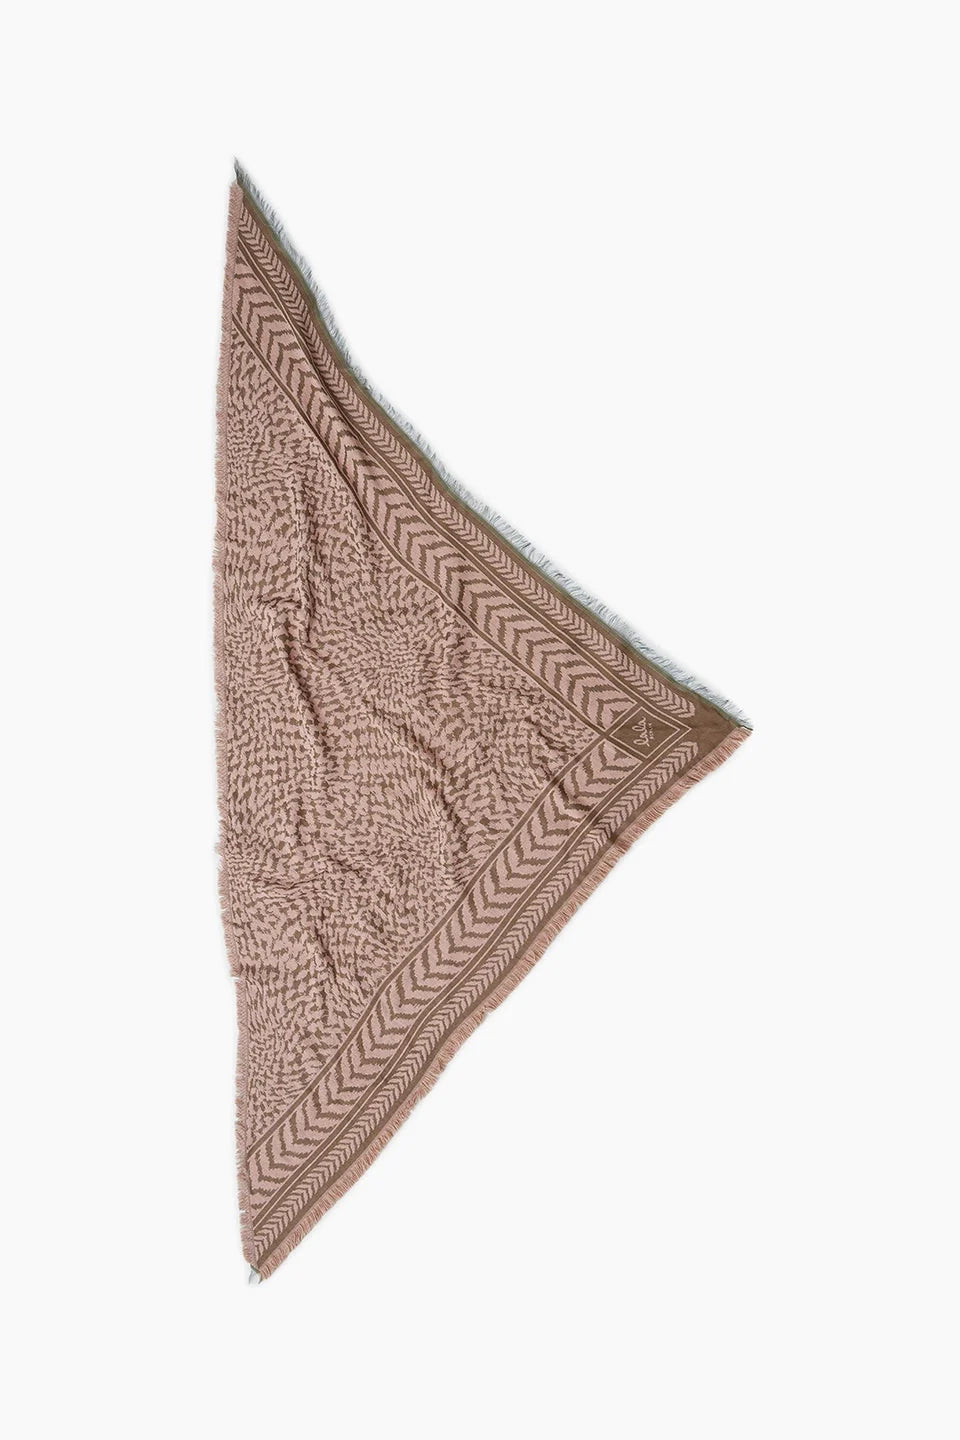 Lala Berlin - Triangle Anmye - Powder/Pink Tørklæder 